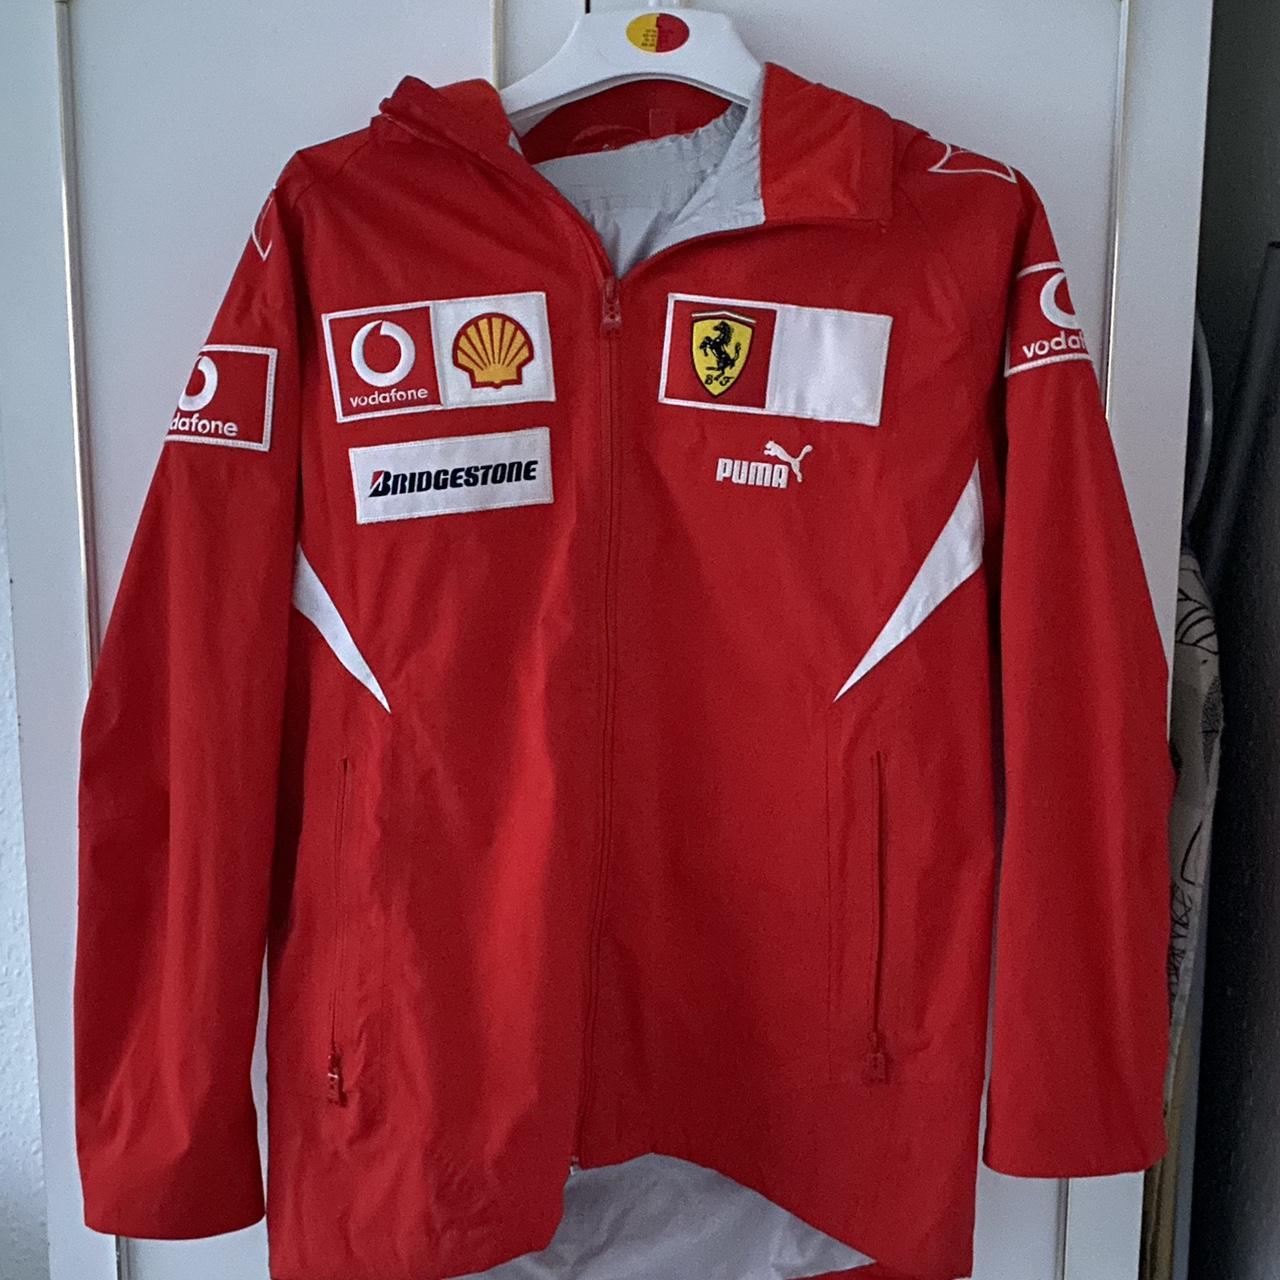 Ferrari jacket - Depop